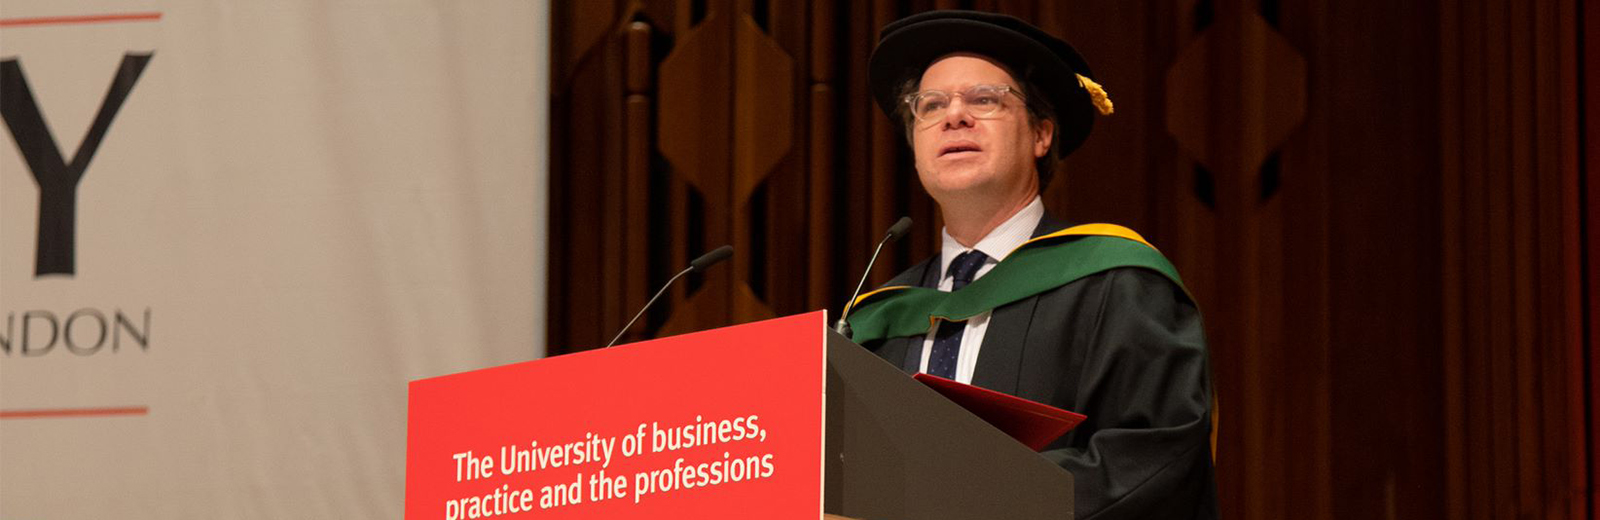 Professor André Spicer delivers his Graduation speech